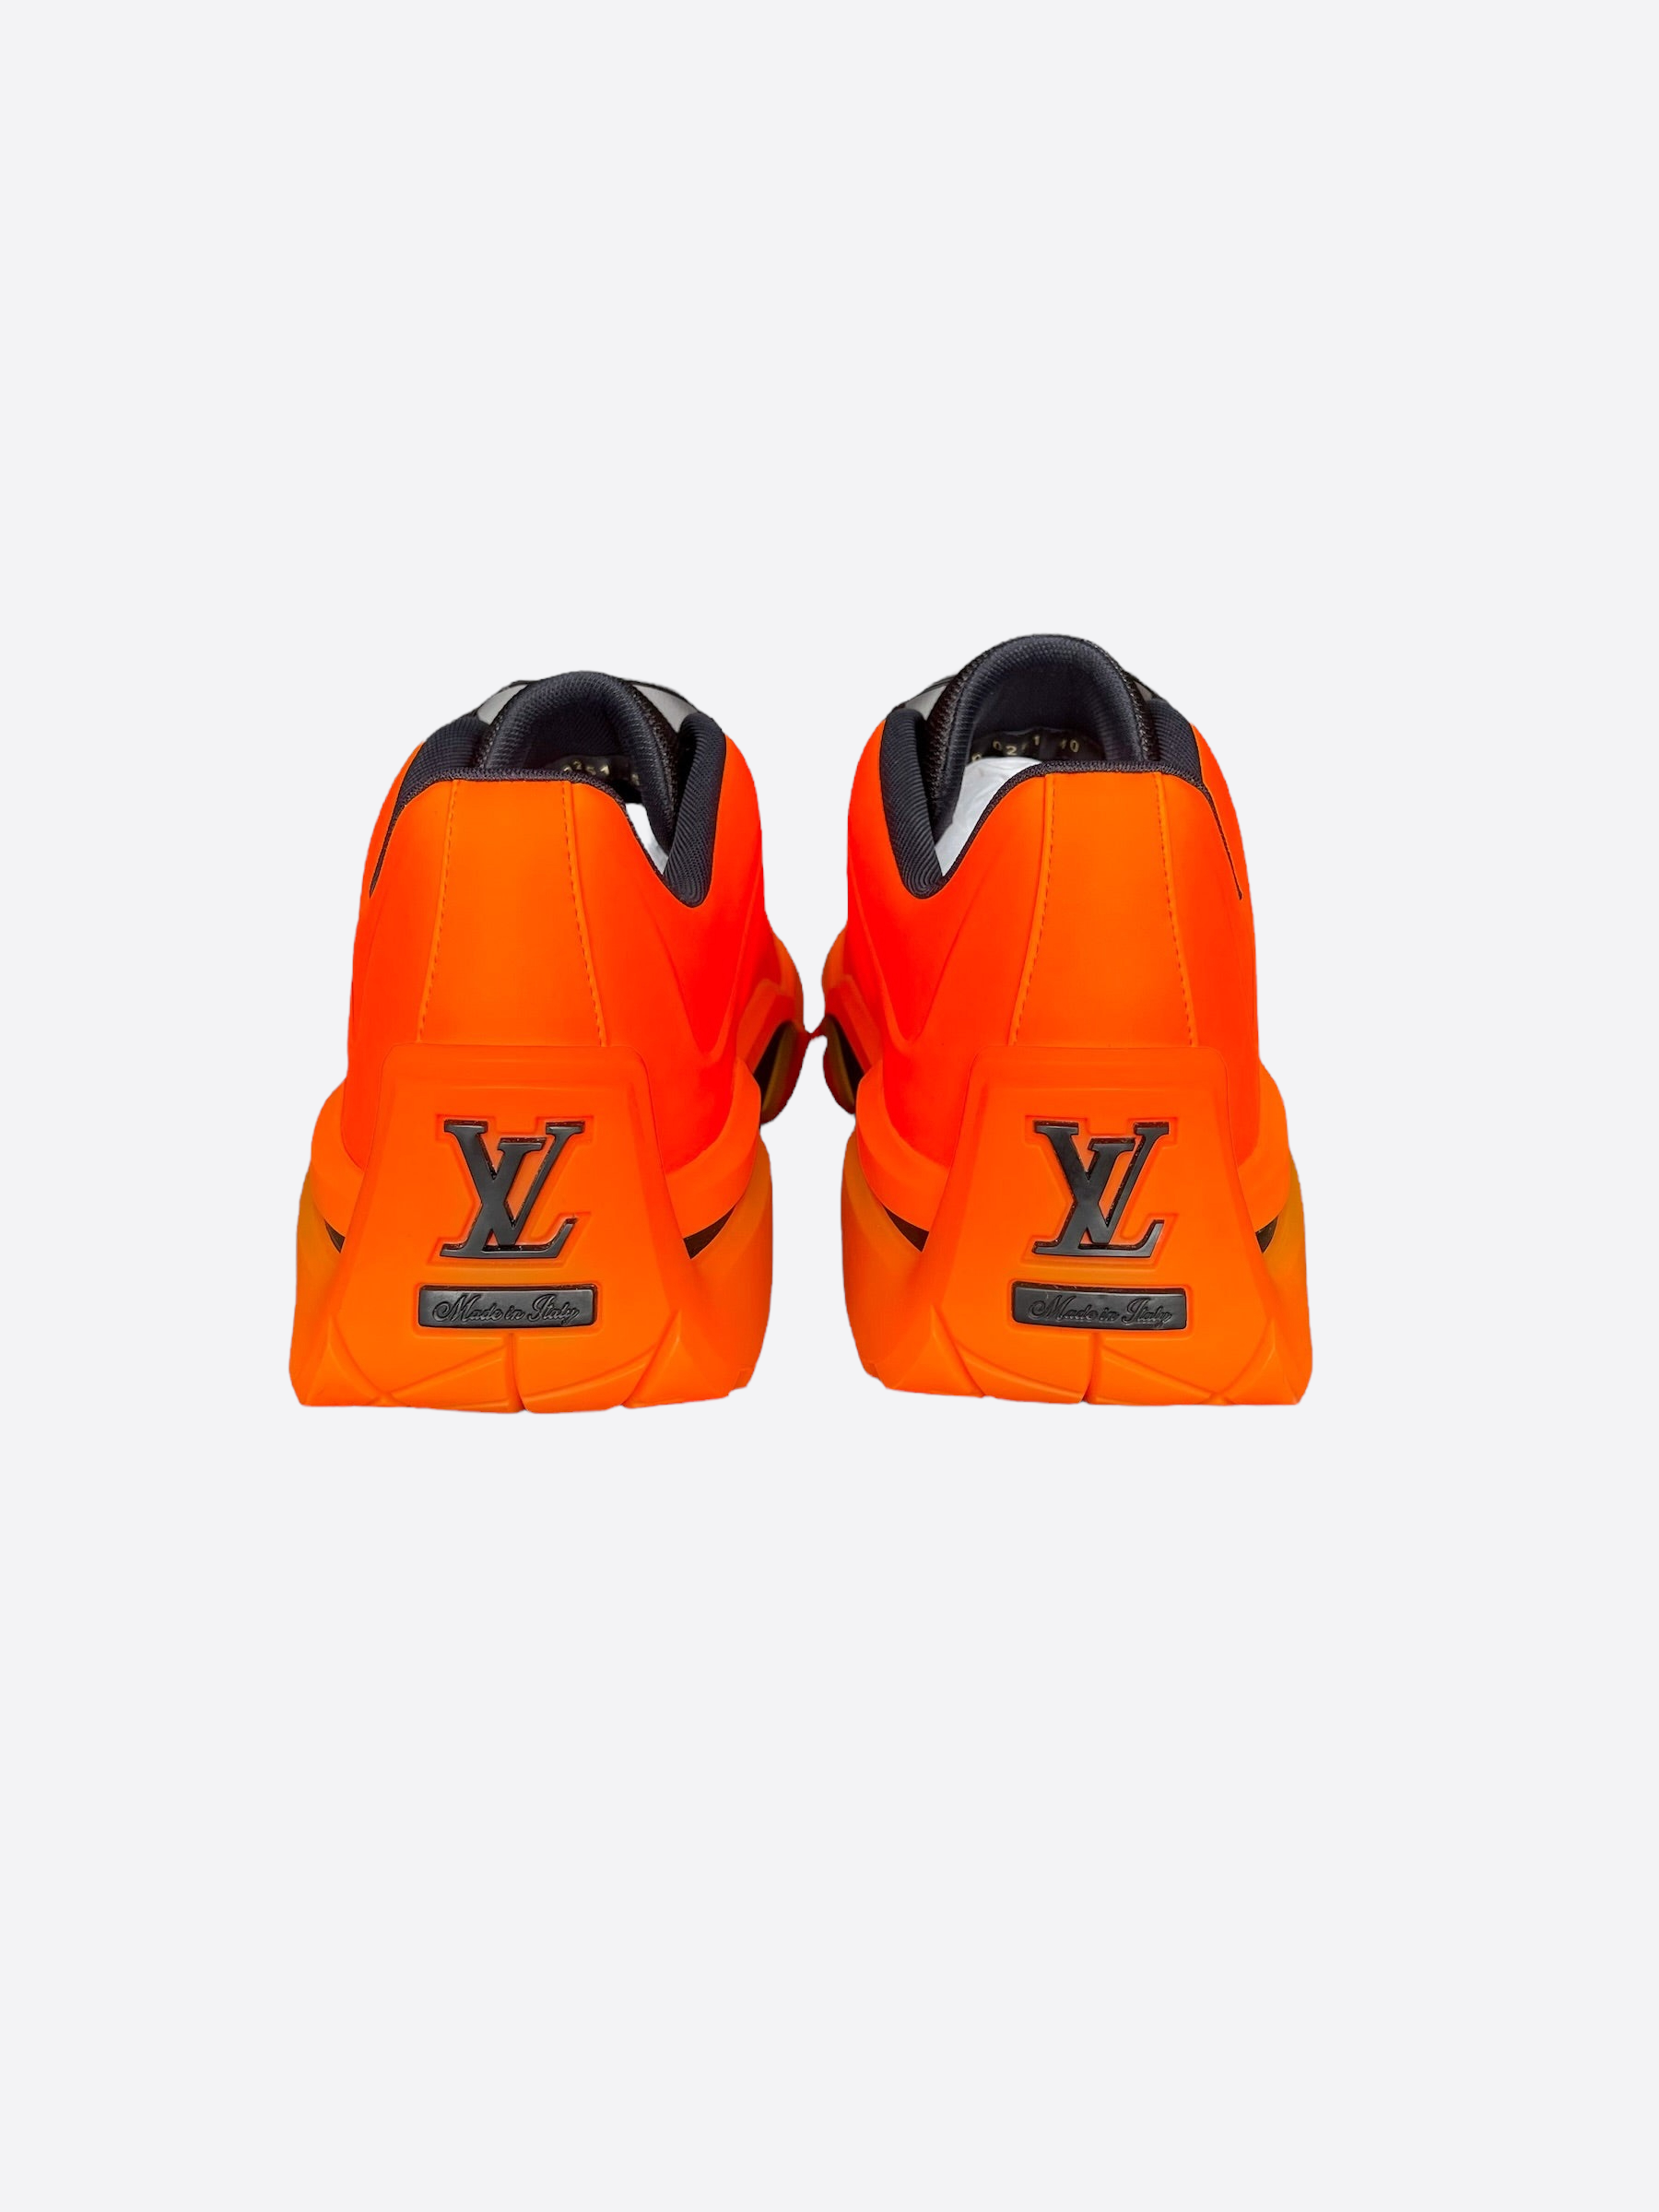 Louis Vuitton Millenium Sneaker